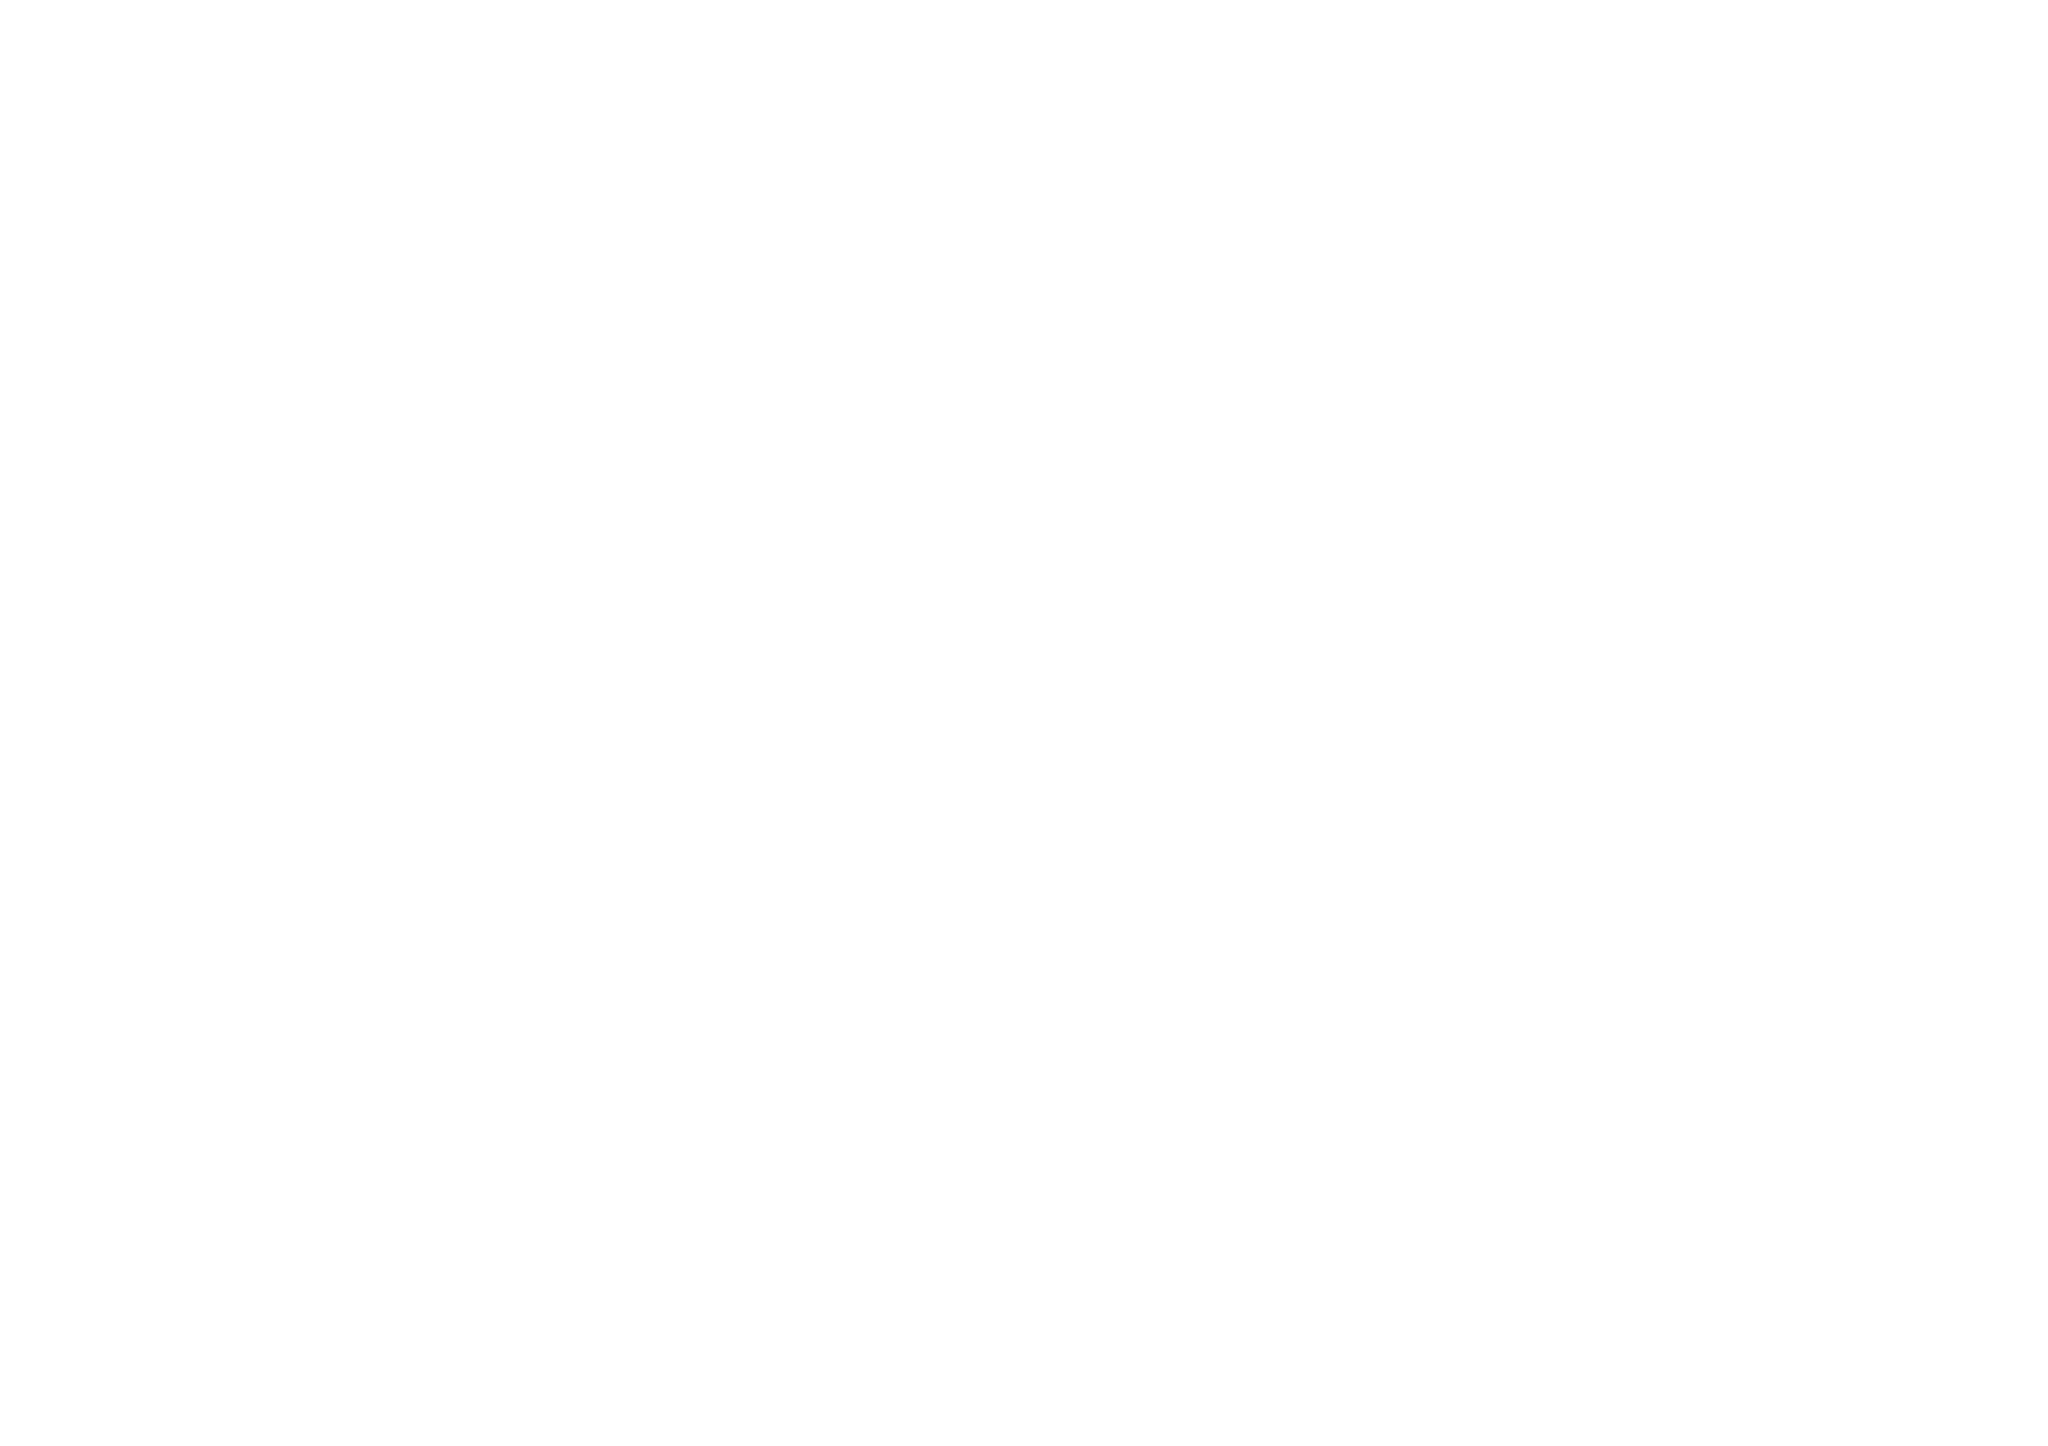 EESTEC LC Zurich